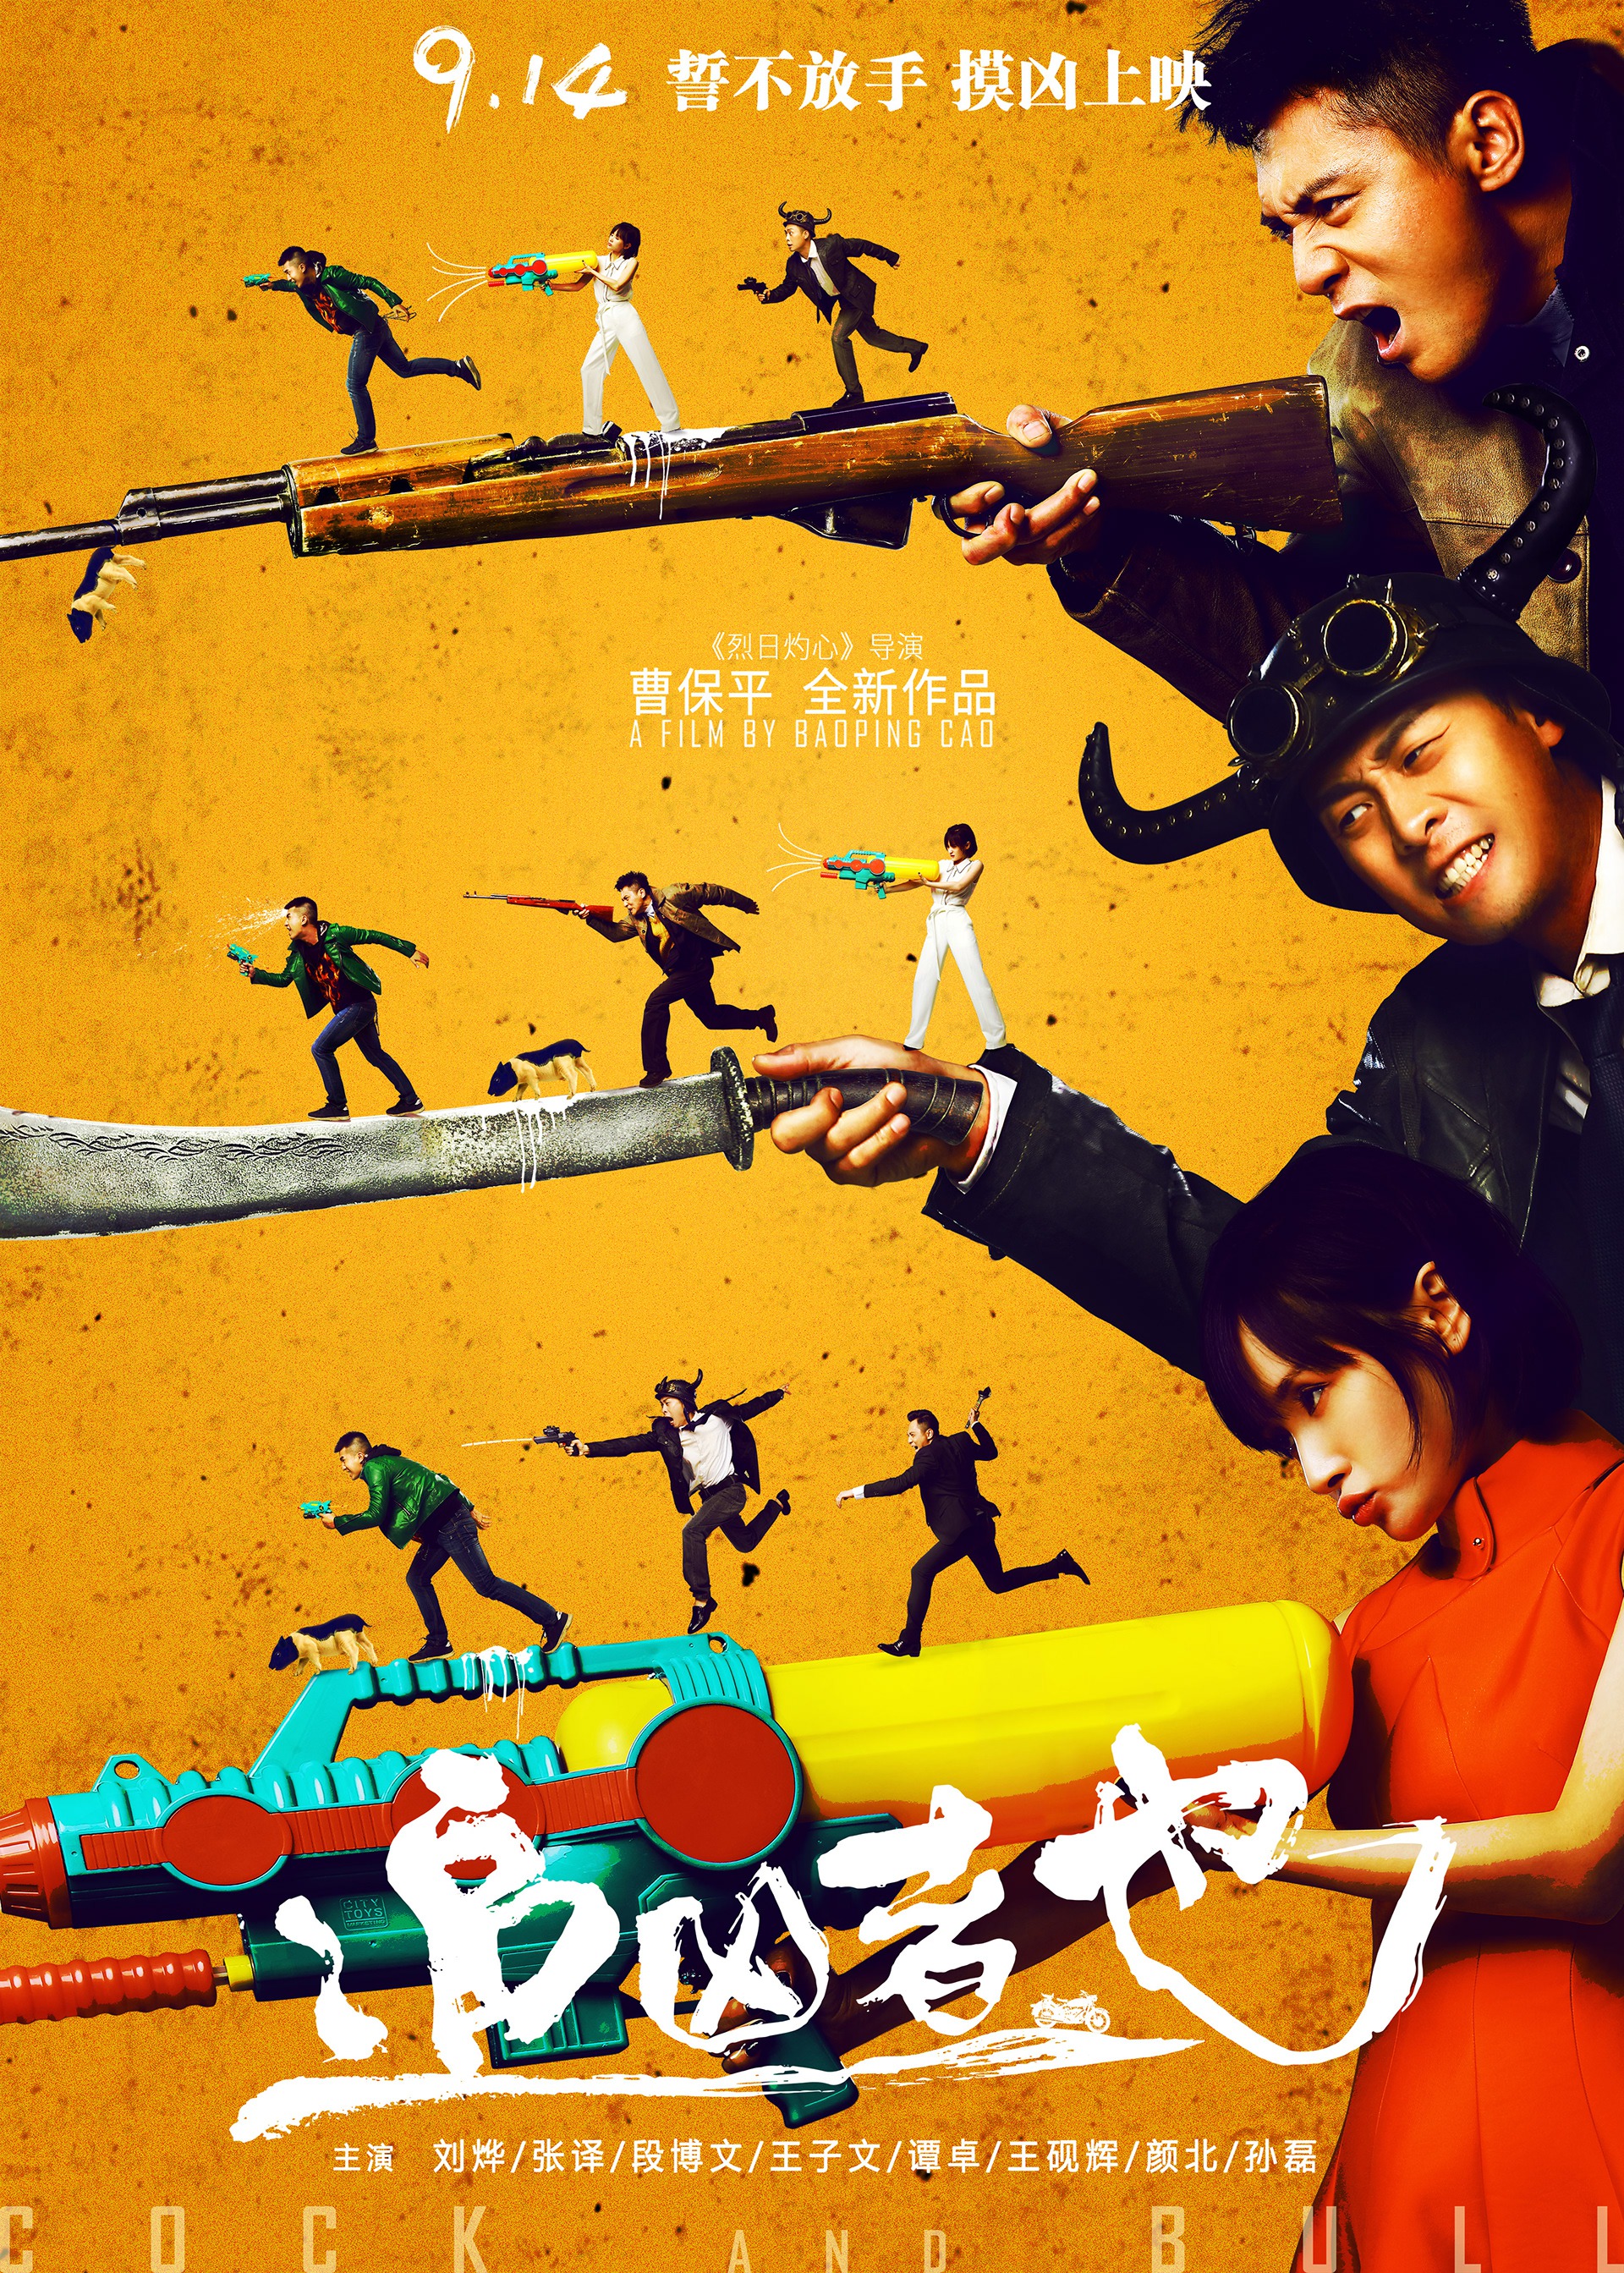 Mega Sized Movie Poster Image for Zhui xiong zhe ye (#6 of 16)